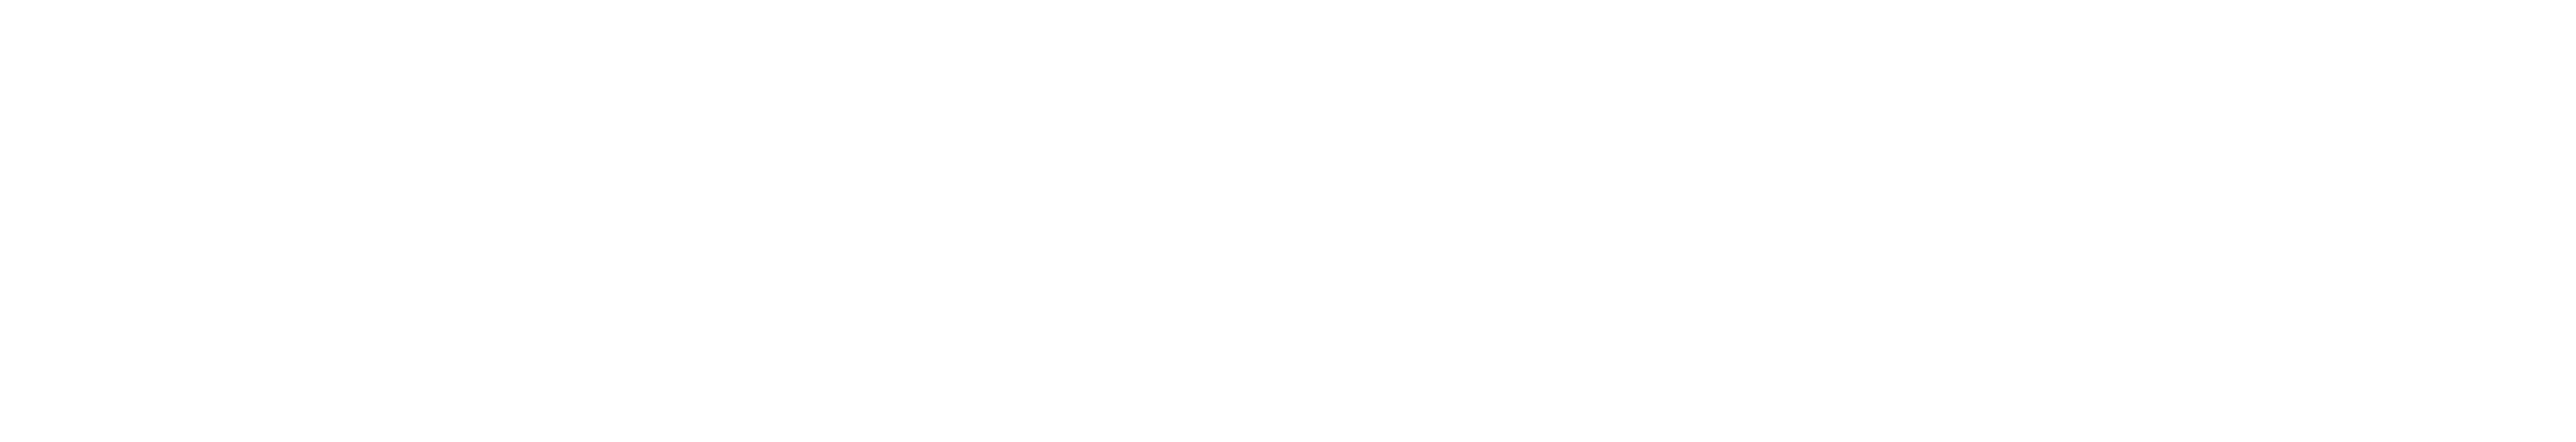 Warragul Community HouseVisa Classic Card